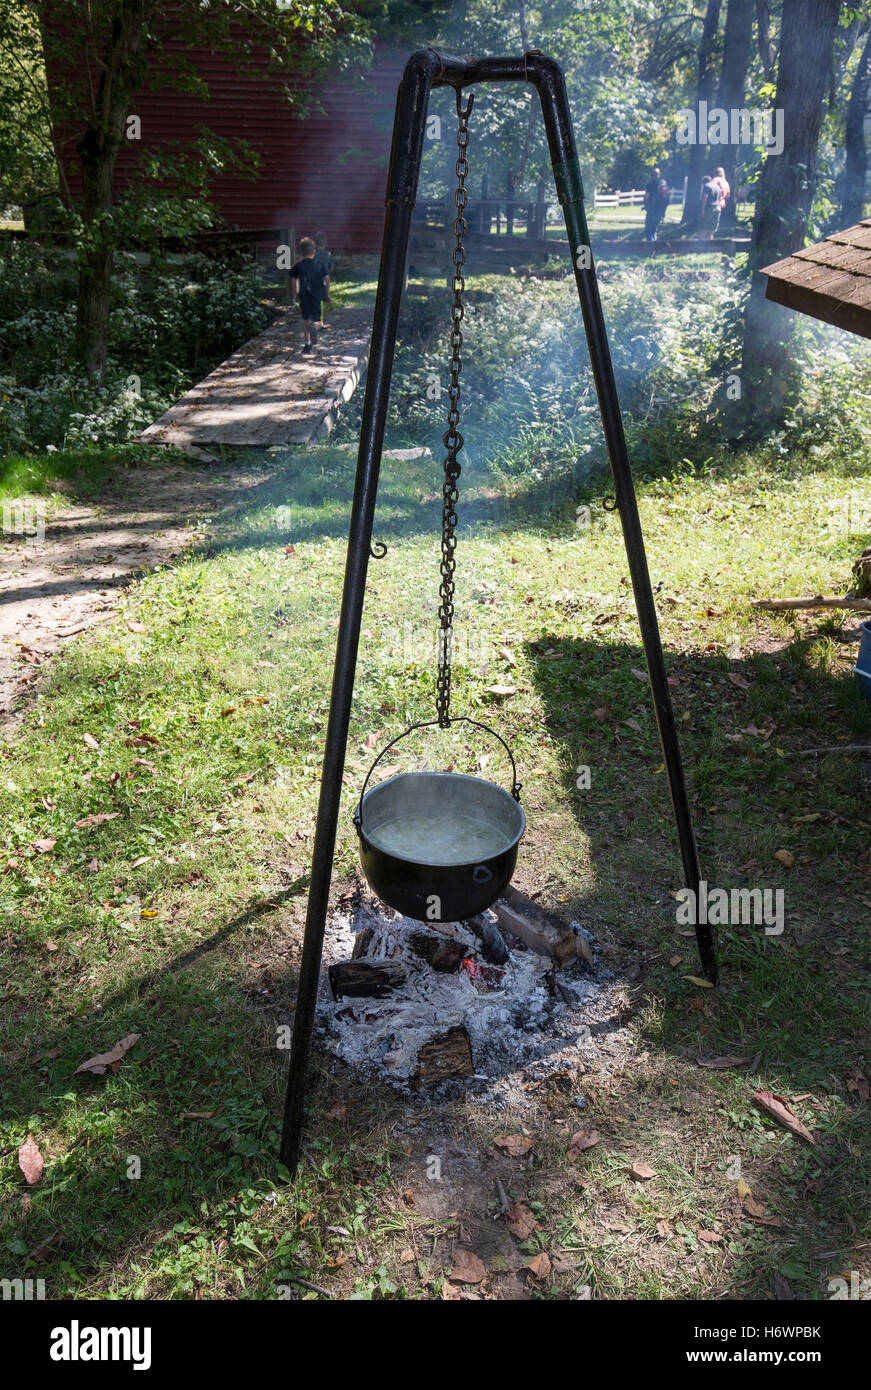 https://c8.alamy.com/comp/H6WPBK/cabbage-soup-cooking-on-a-campfire-H6WPBK.jpg